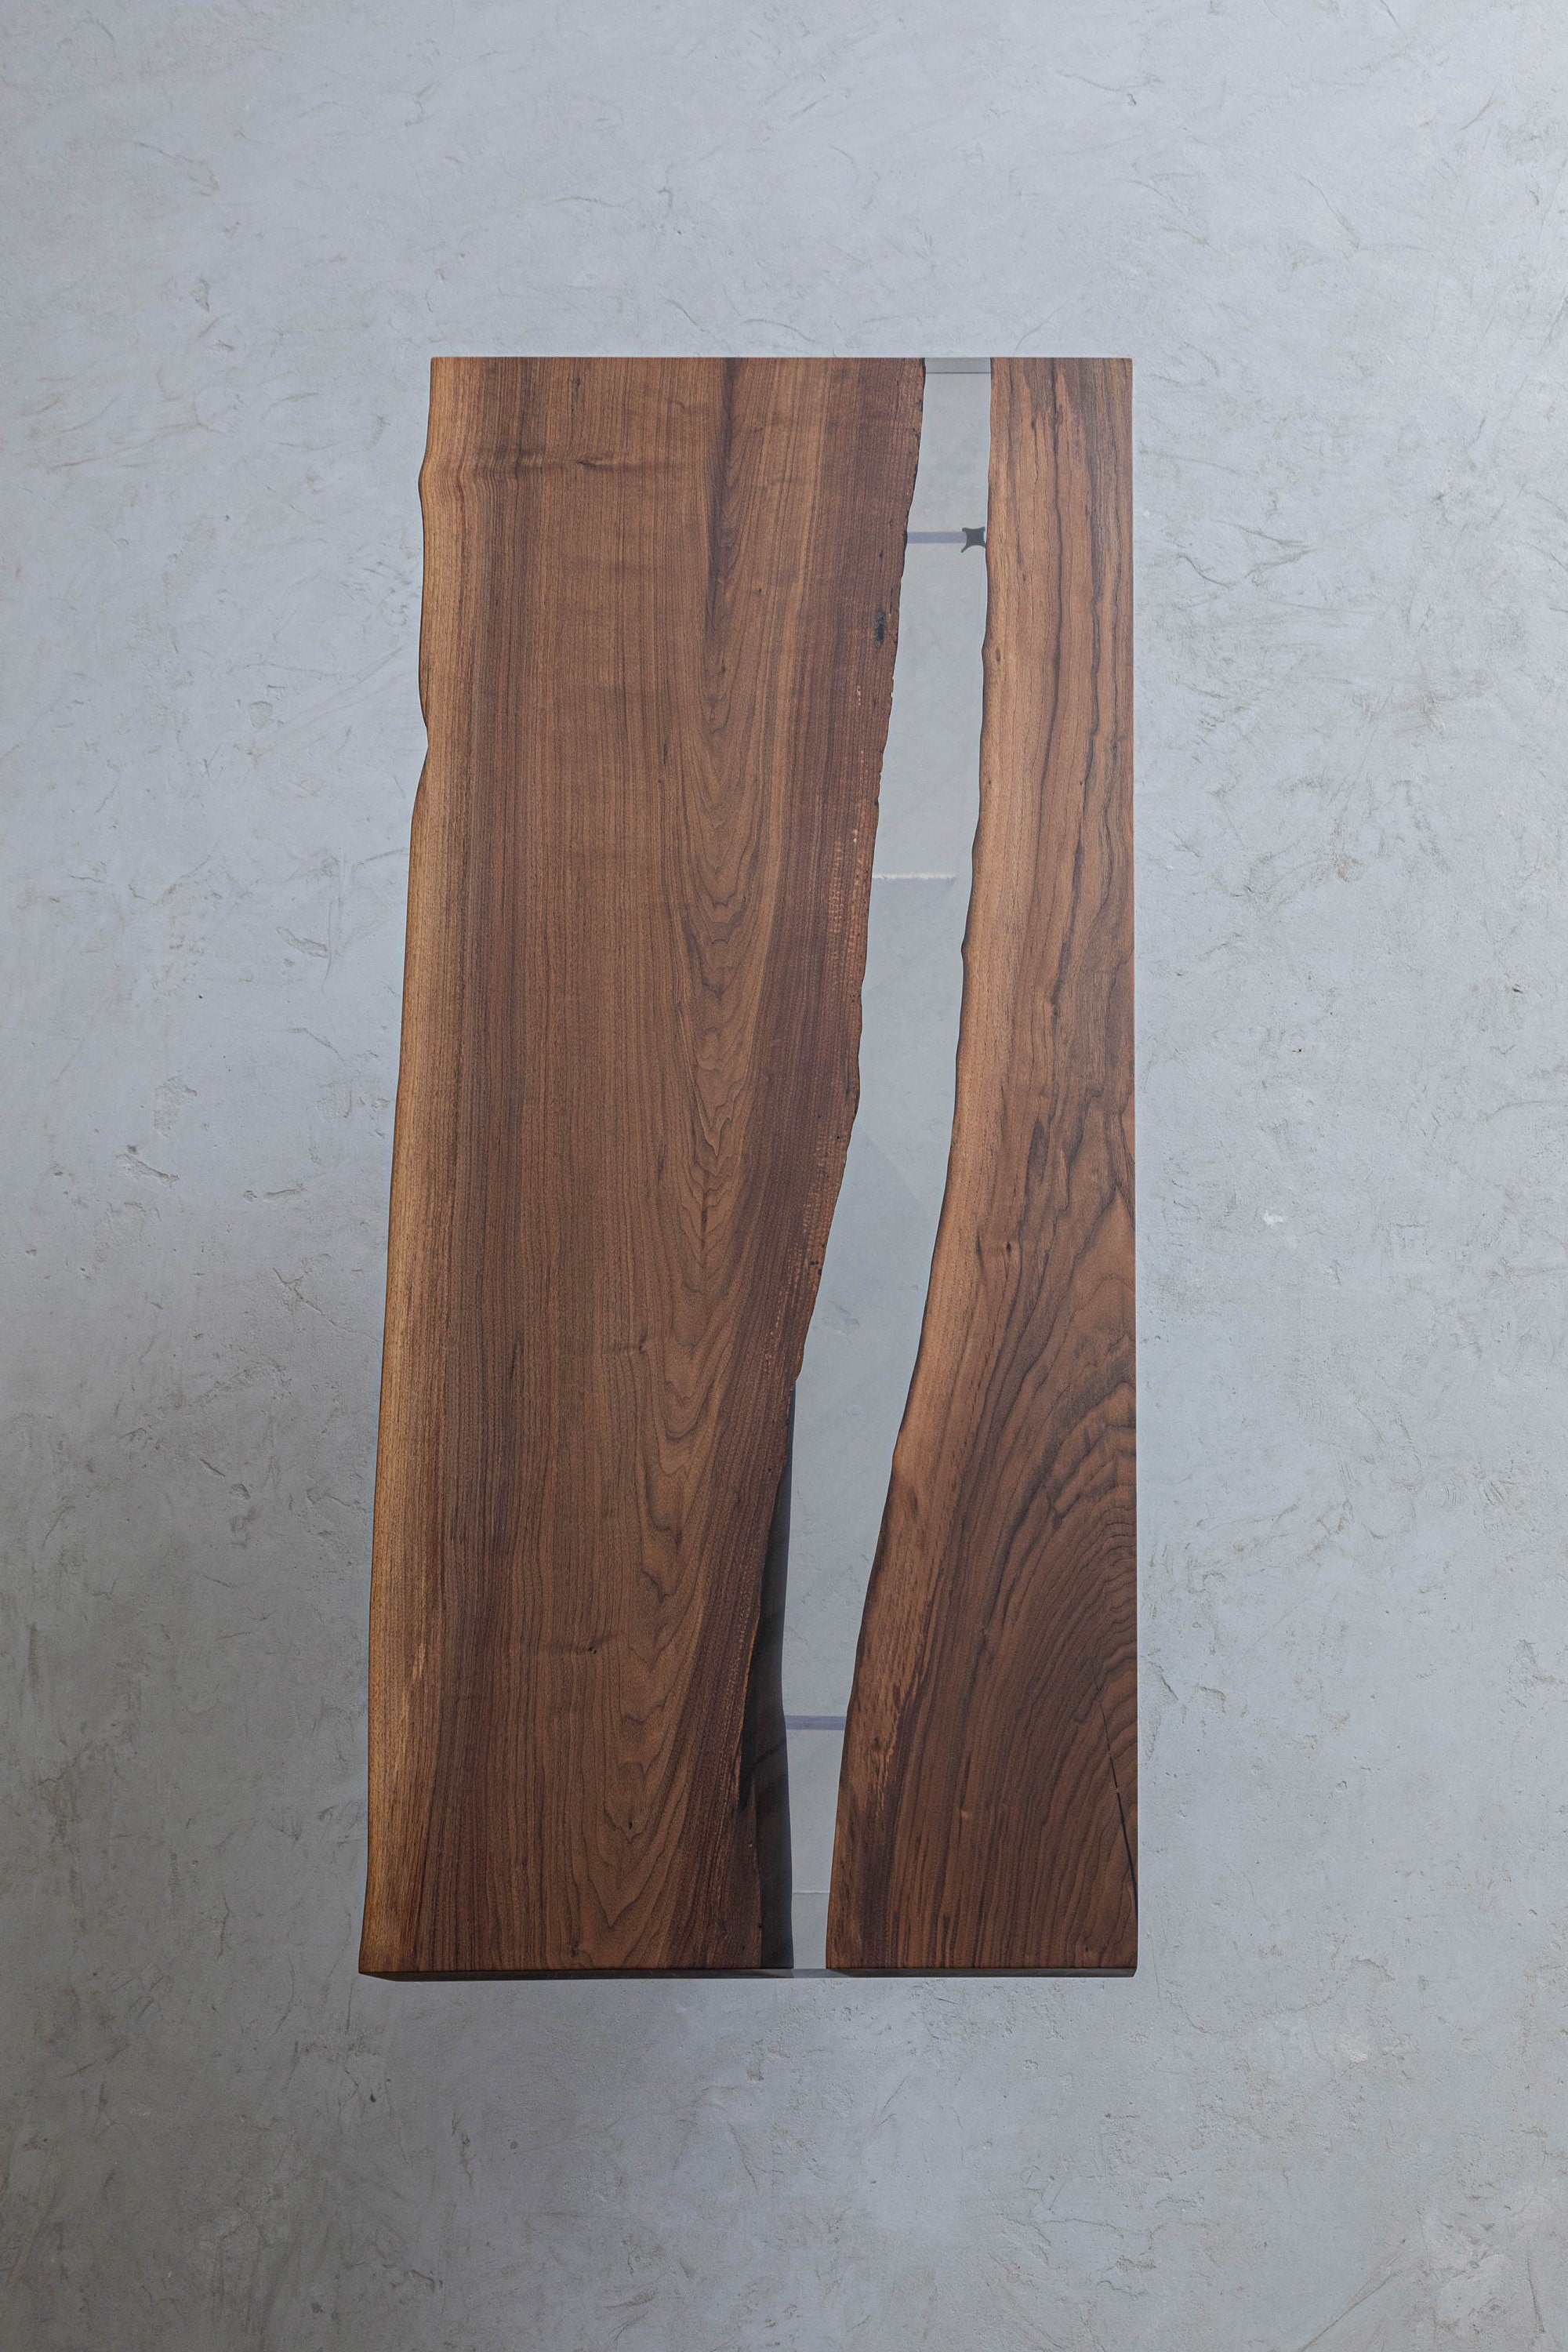 Handmade epoxy table, Transparent Furniture Vivid Edge, Special Epoxy Wood Resin table